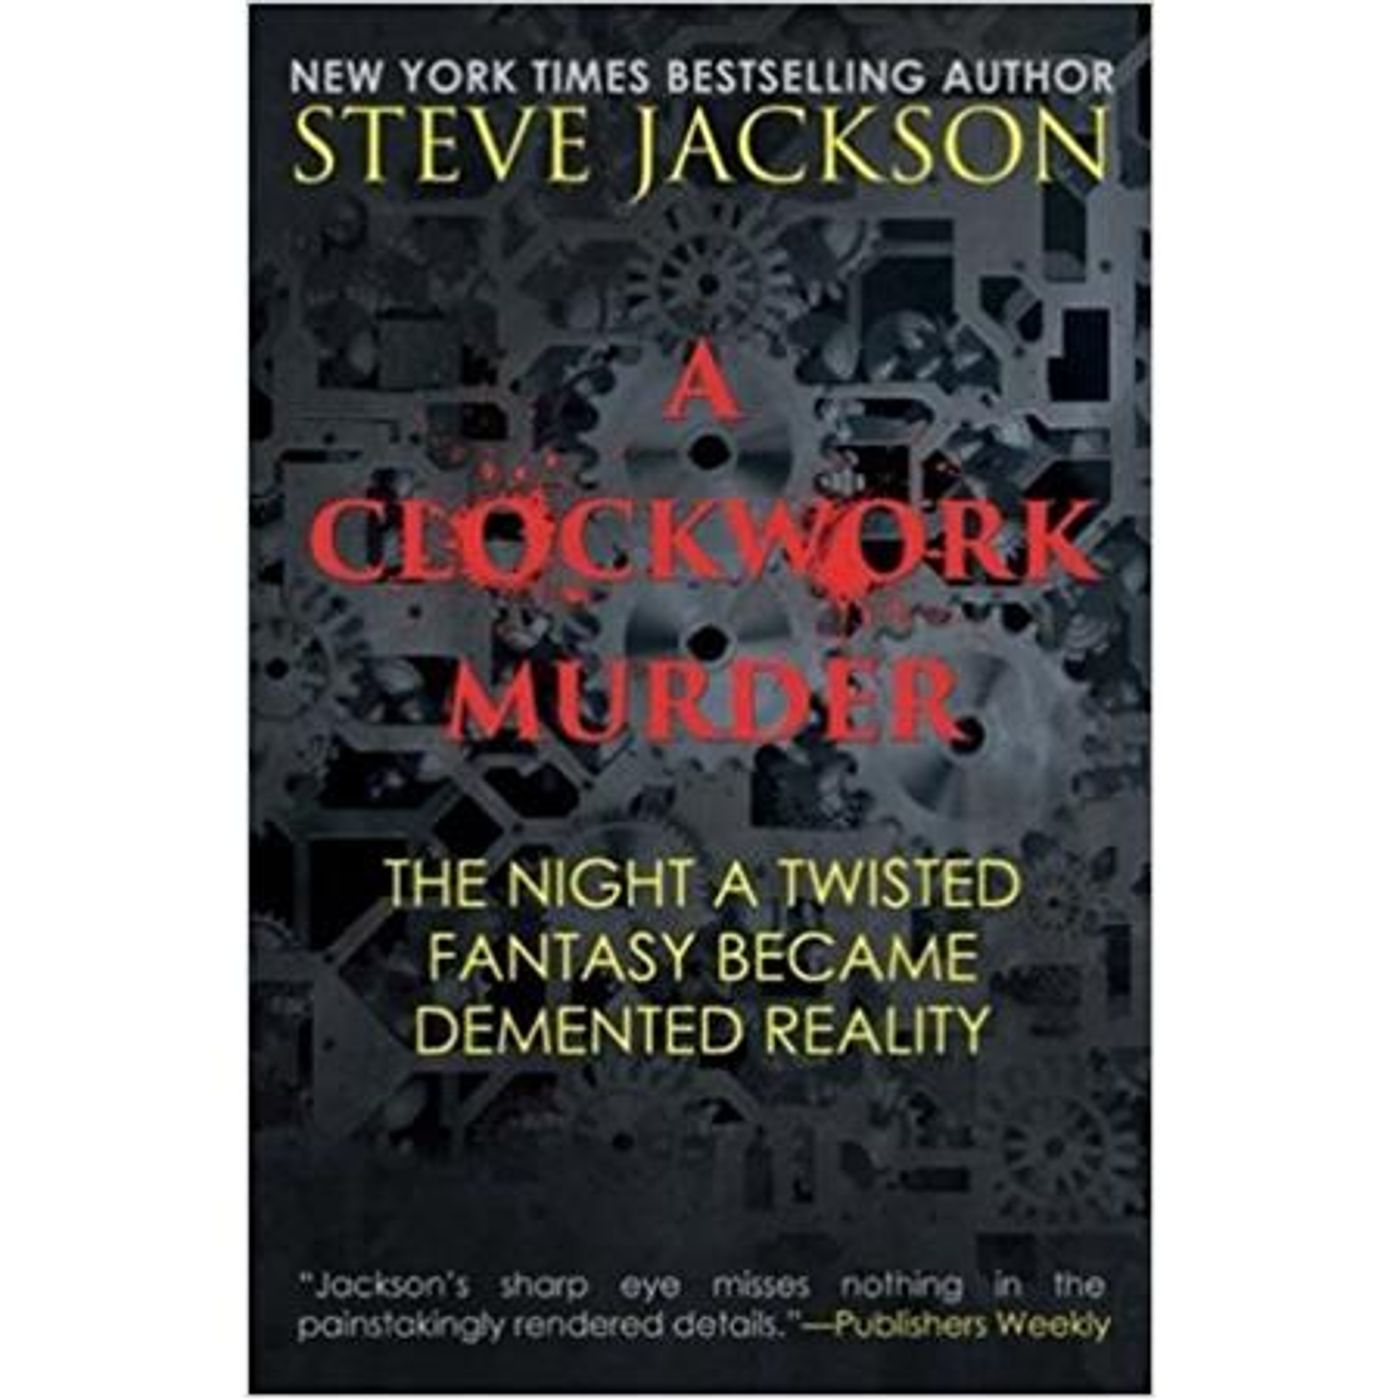 A CLOCKWORK MURDER-Steve Jackson